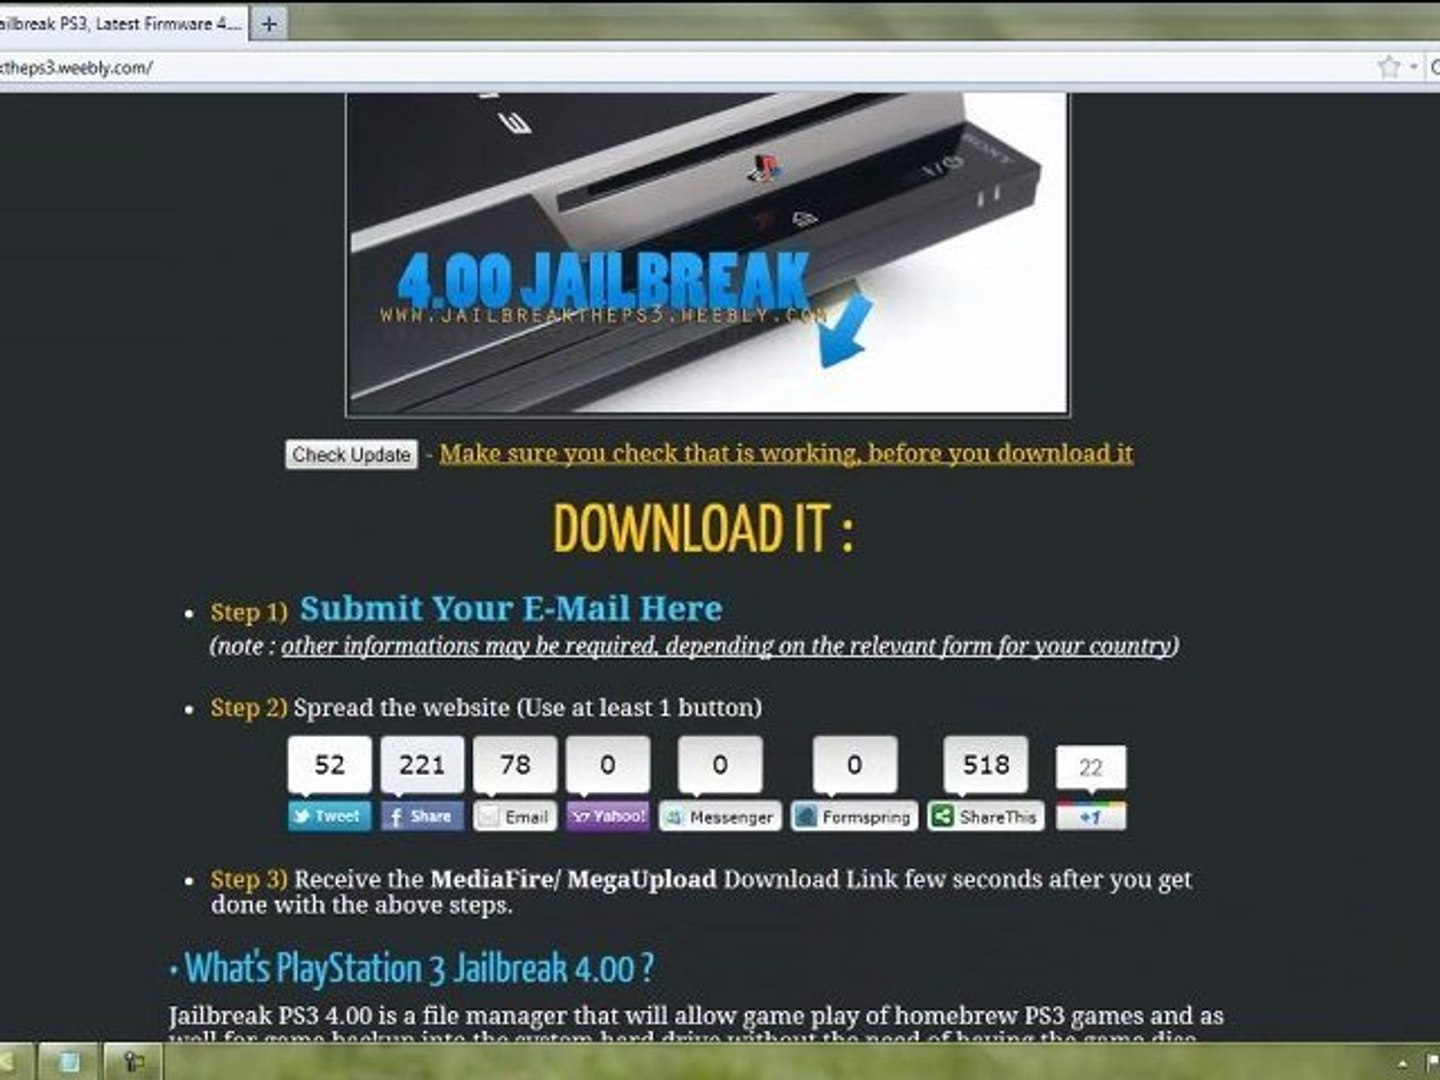 PS3 Jailbreak 4.00 CFW Update [TUTORIAL] - video Dailymotion